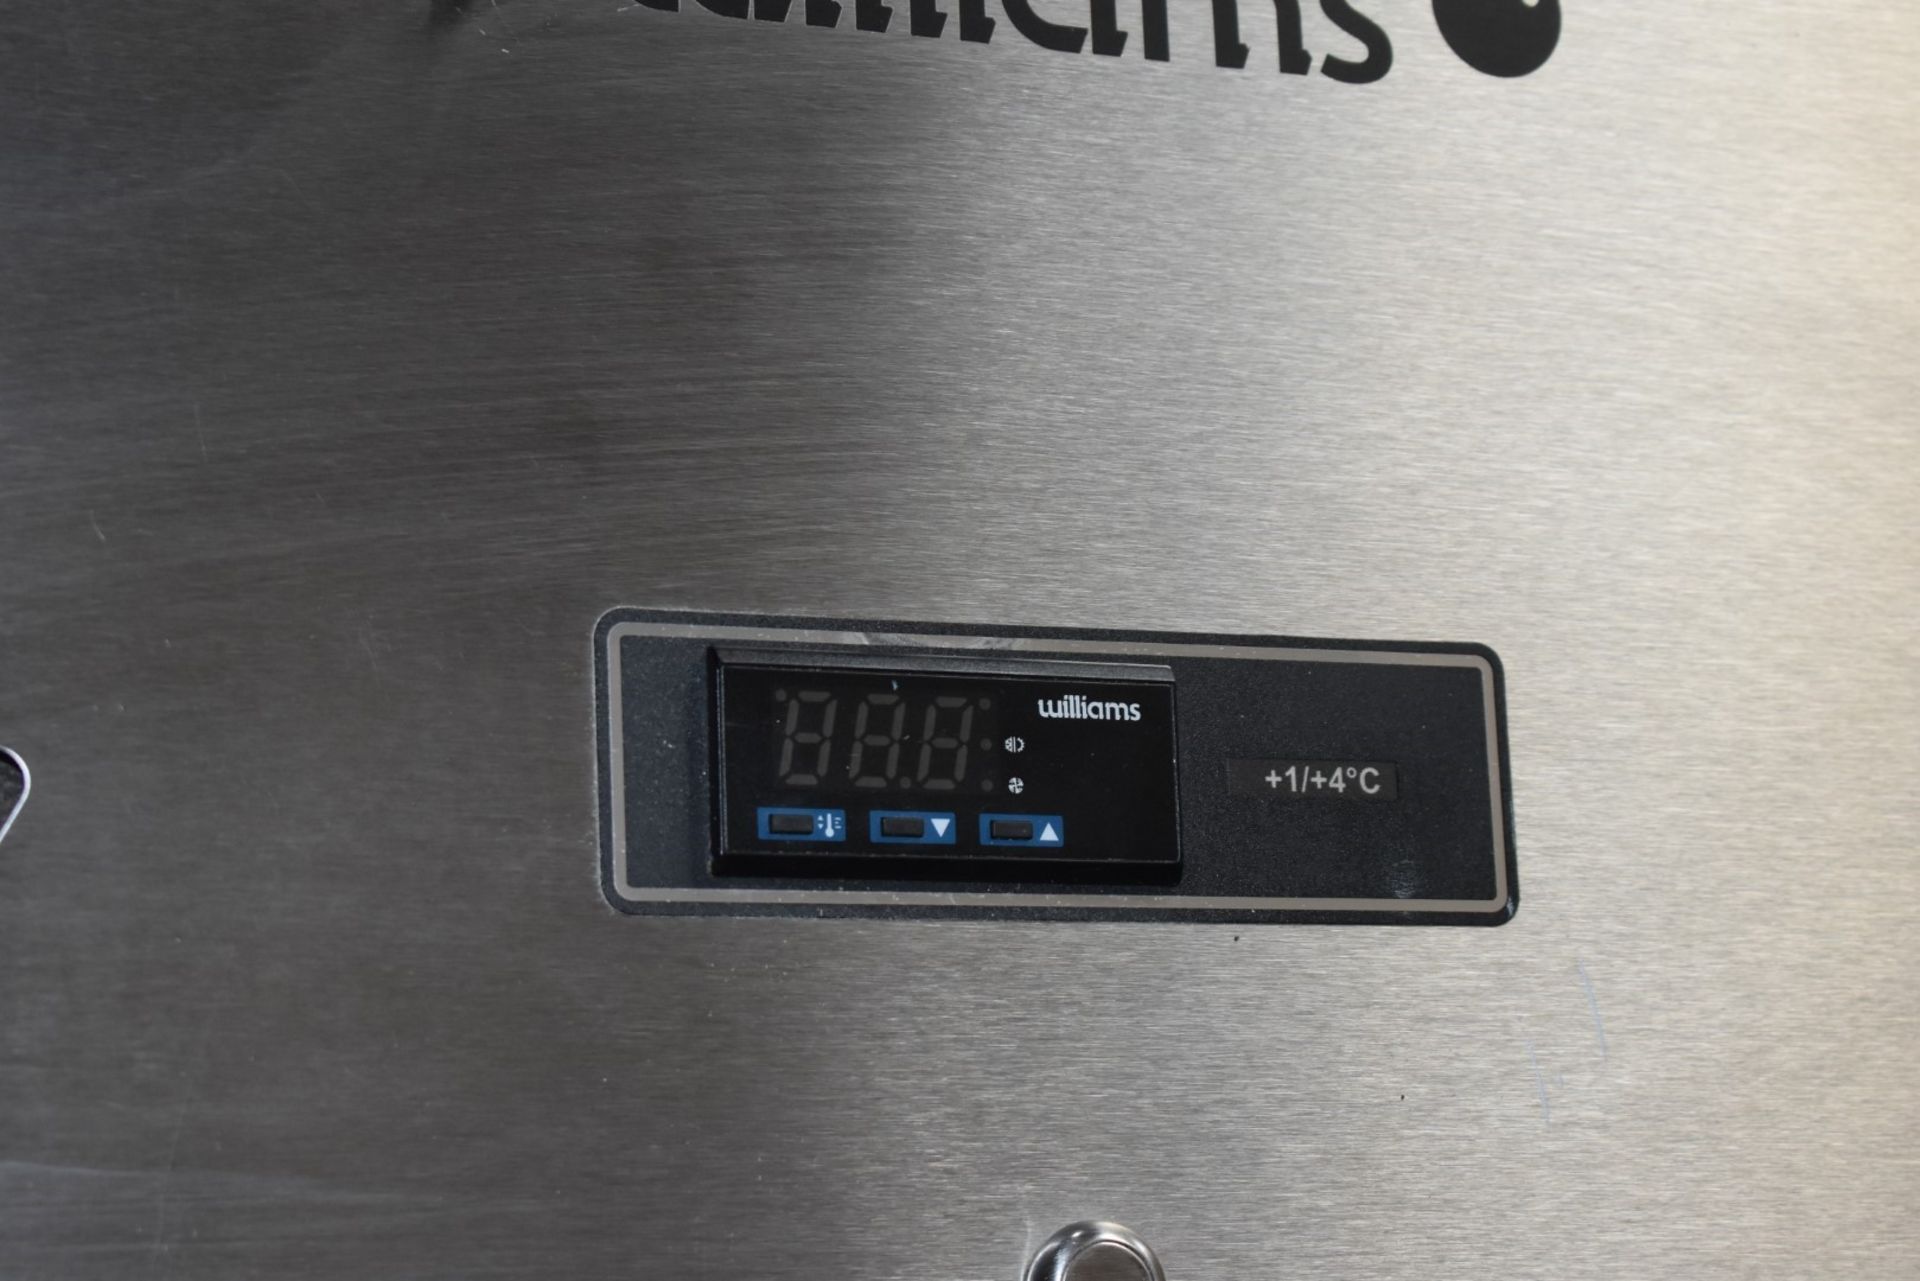 1 x Williams Jade Upright Single Door Refrigerator With Stainless Steel Exterior - Model HJ1TSA - - Image 10 of 11